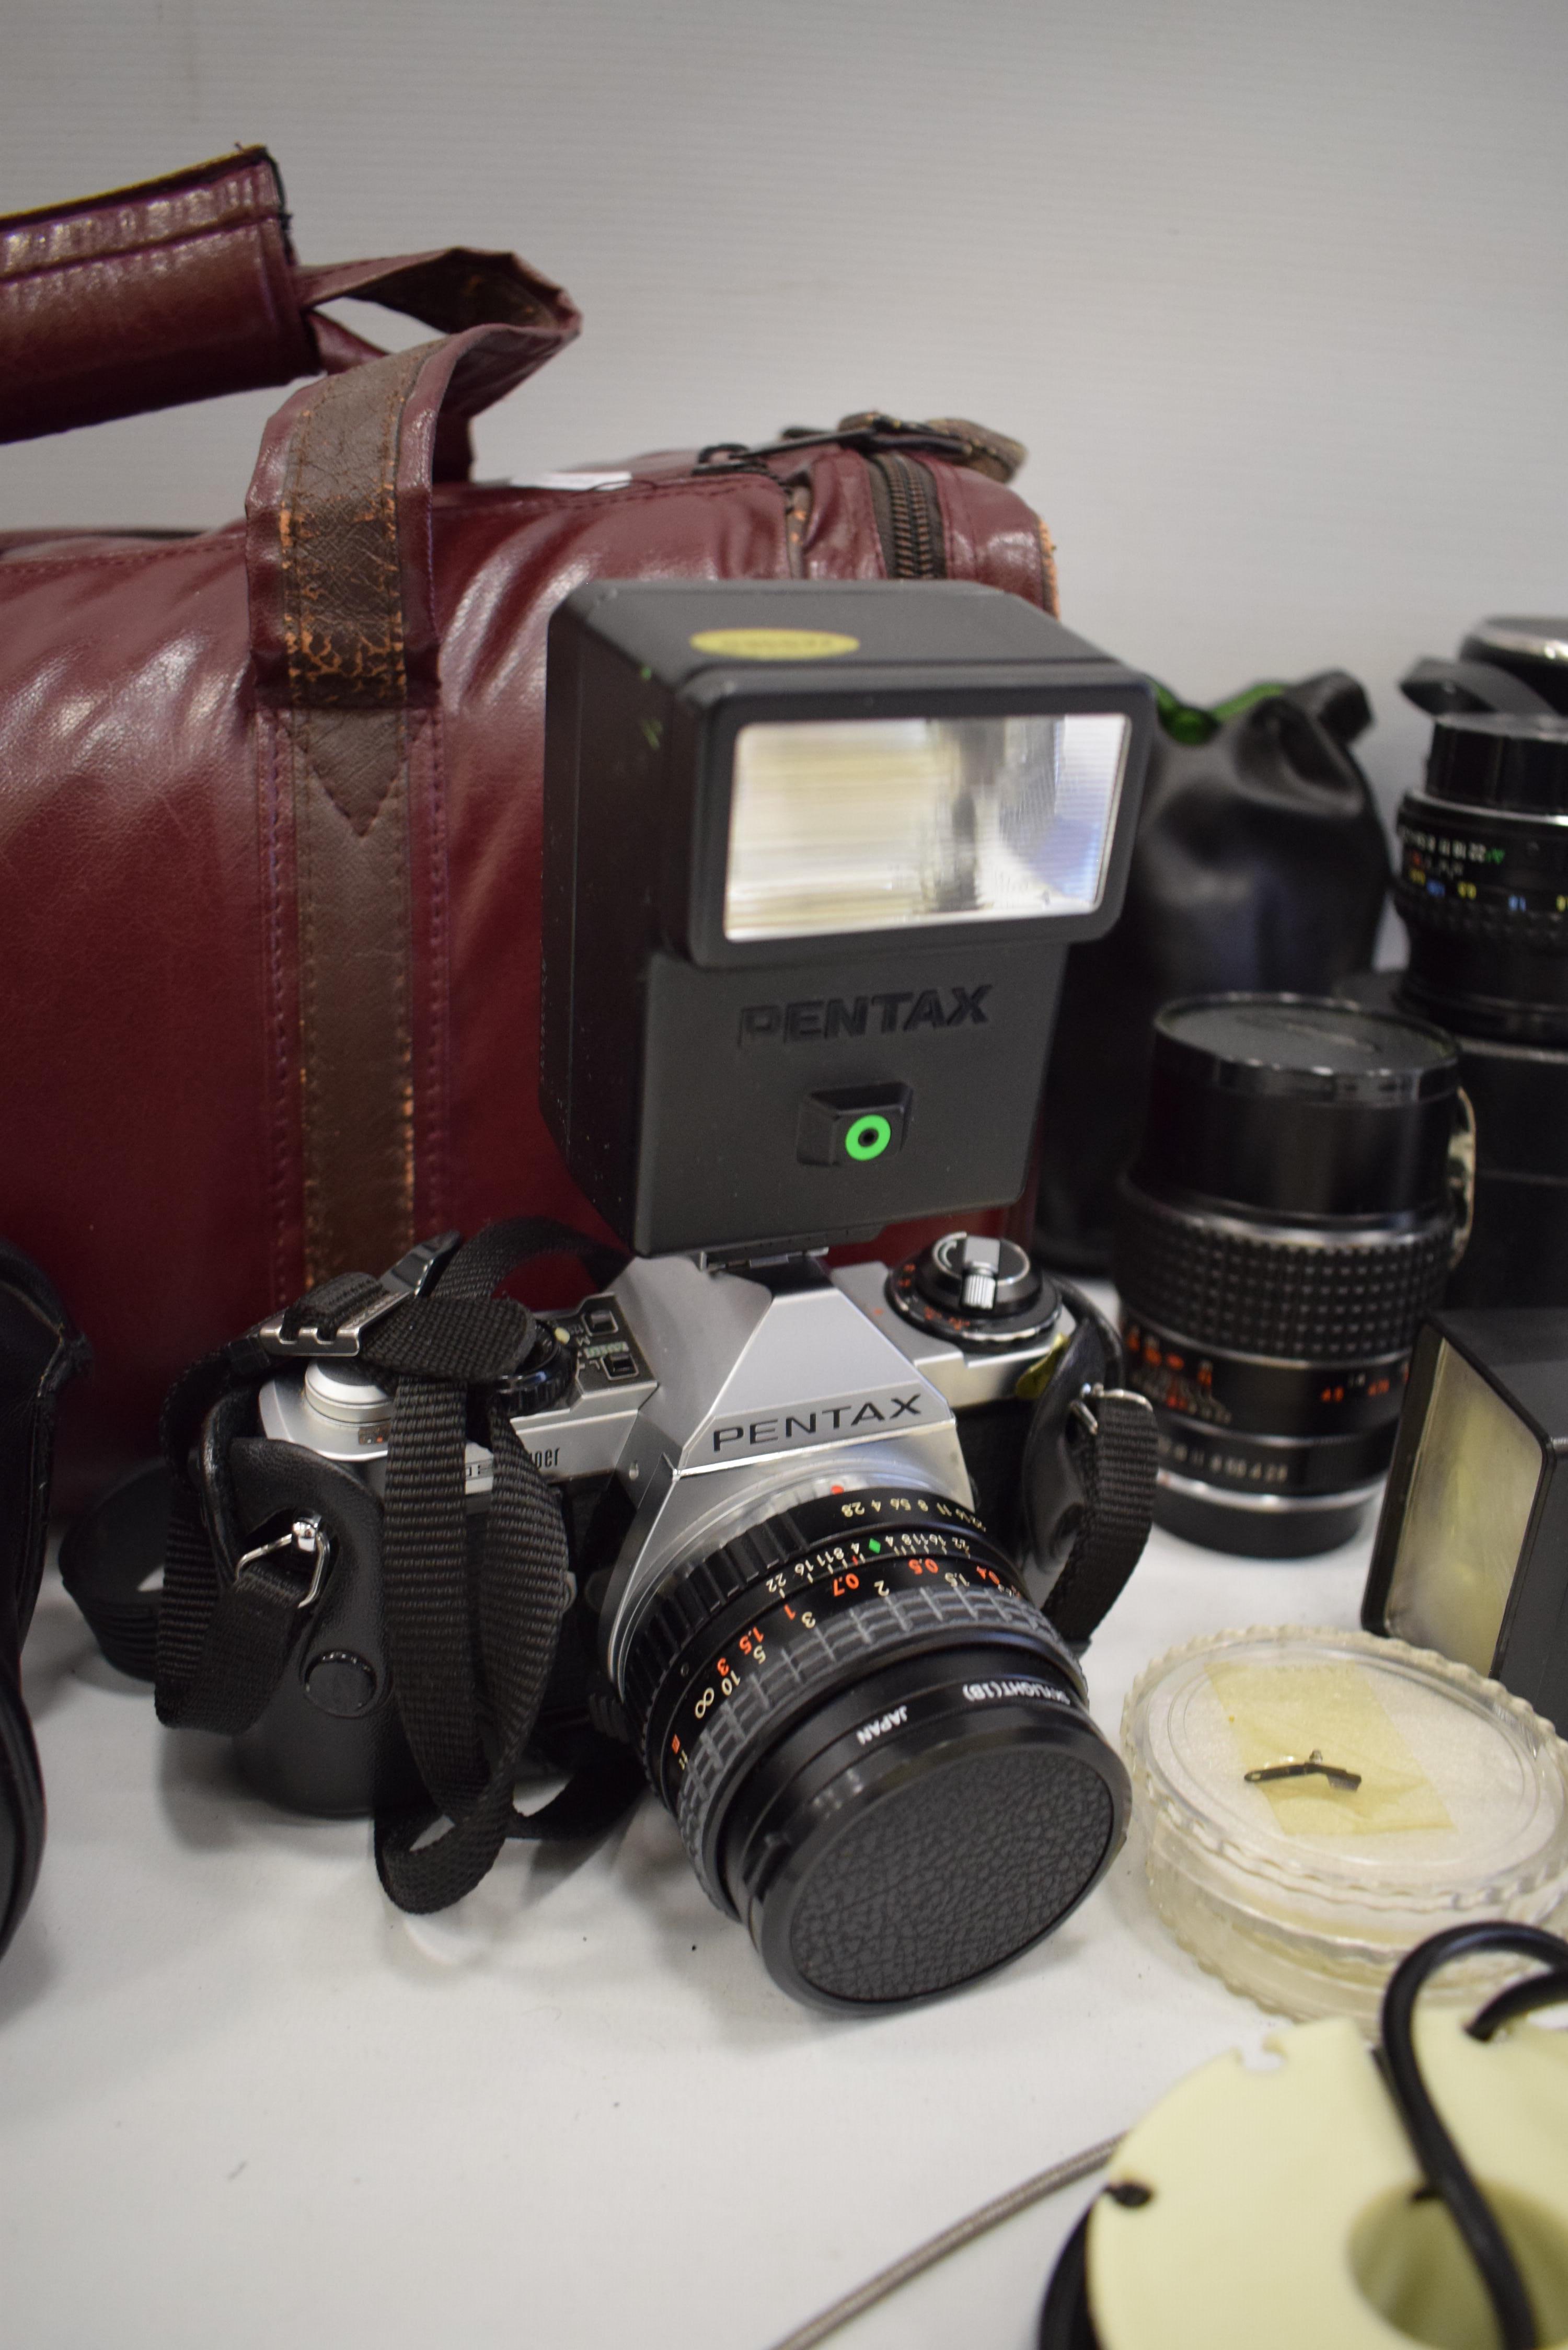 Pentax 35mm SLR Camera model number ME Super together with various lens and light flash etc - Image 2 of 3